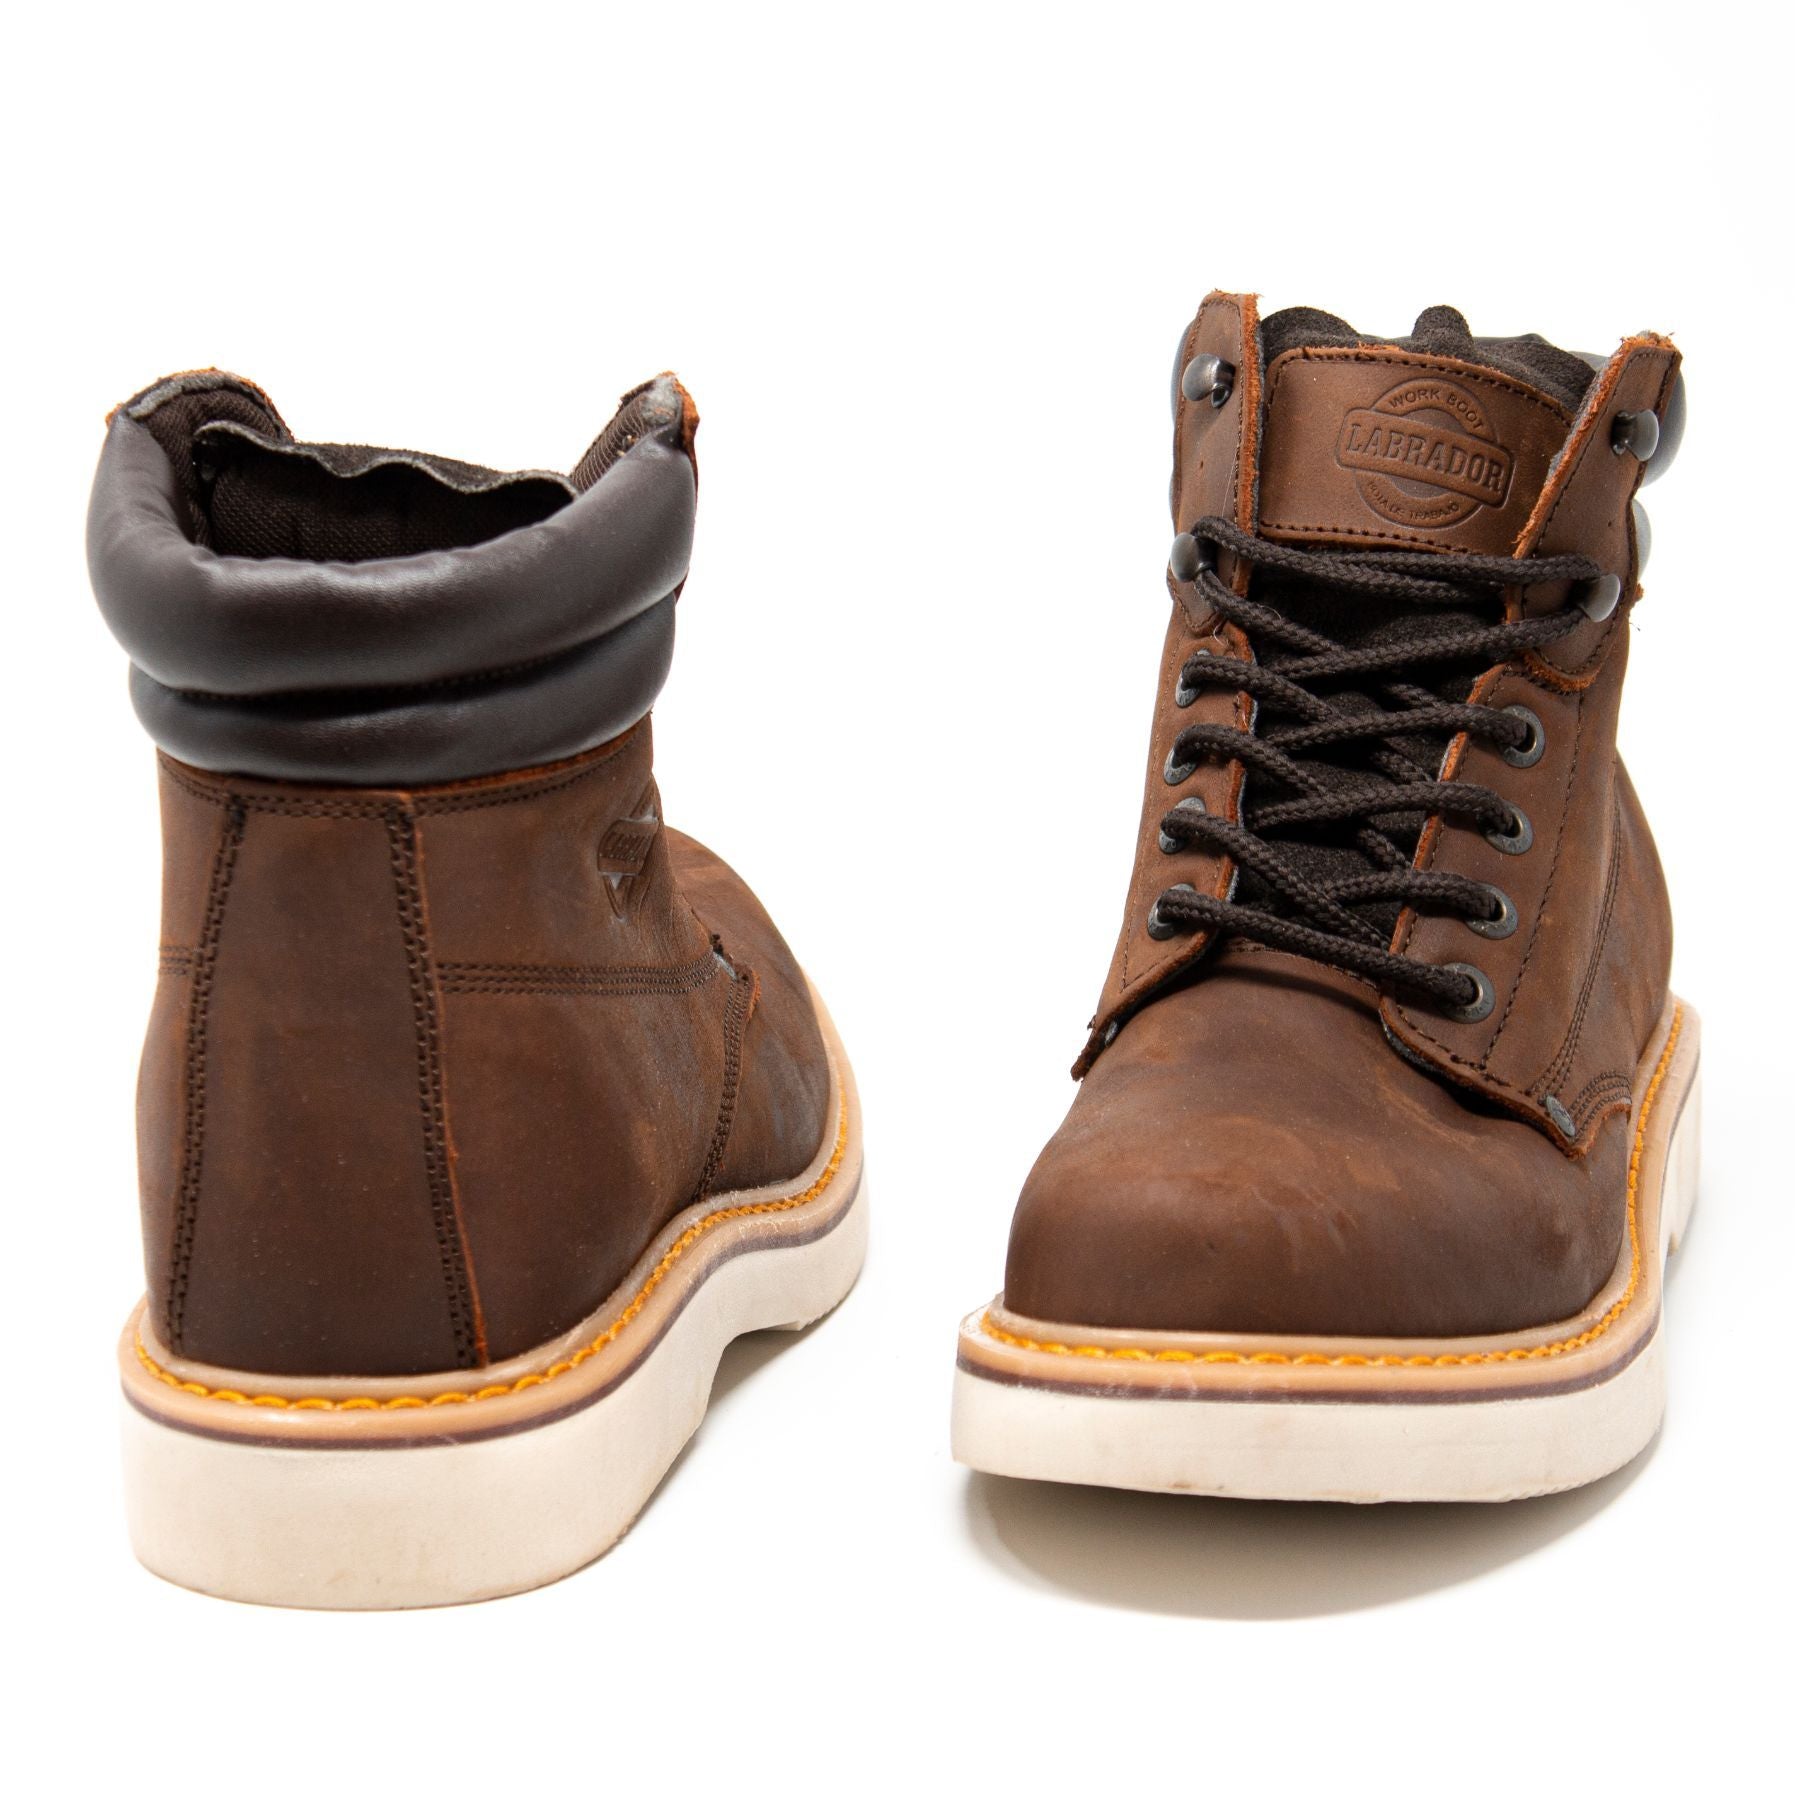 Men's Work Boots - Wedge Sole & Lightweight - Brown Work Boots - Labrador - 6" Work Boots - Copper 6in Work Boots